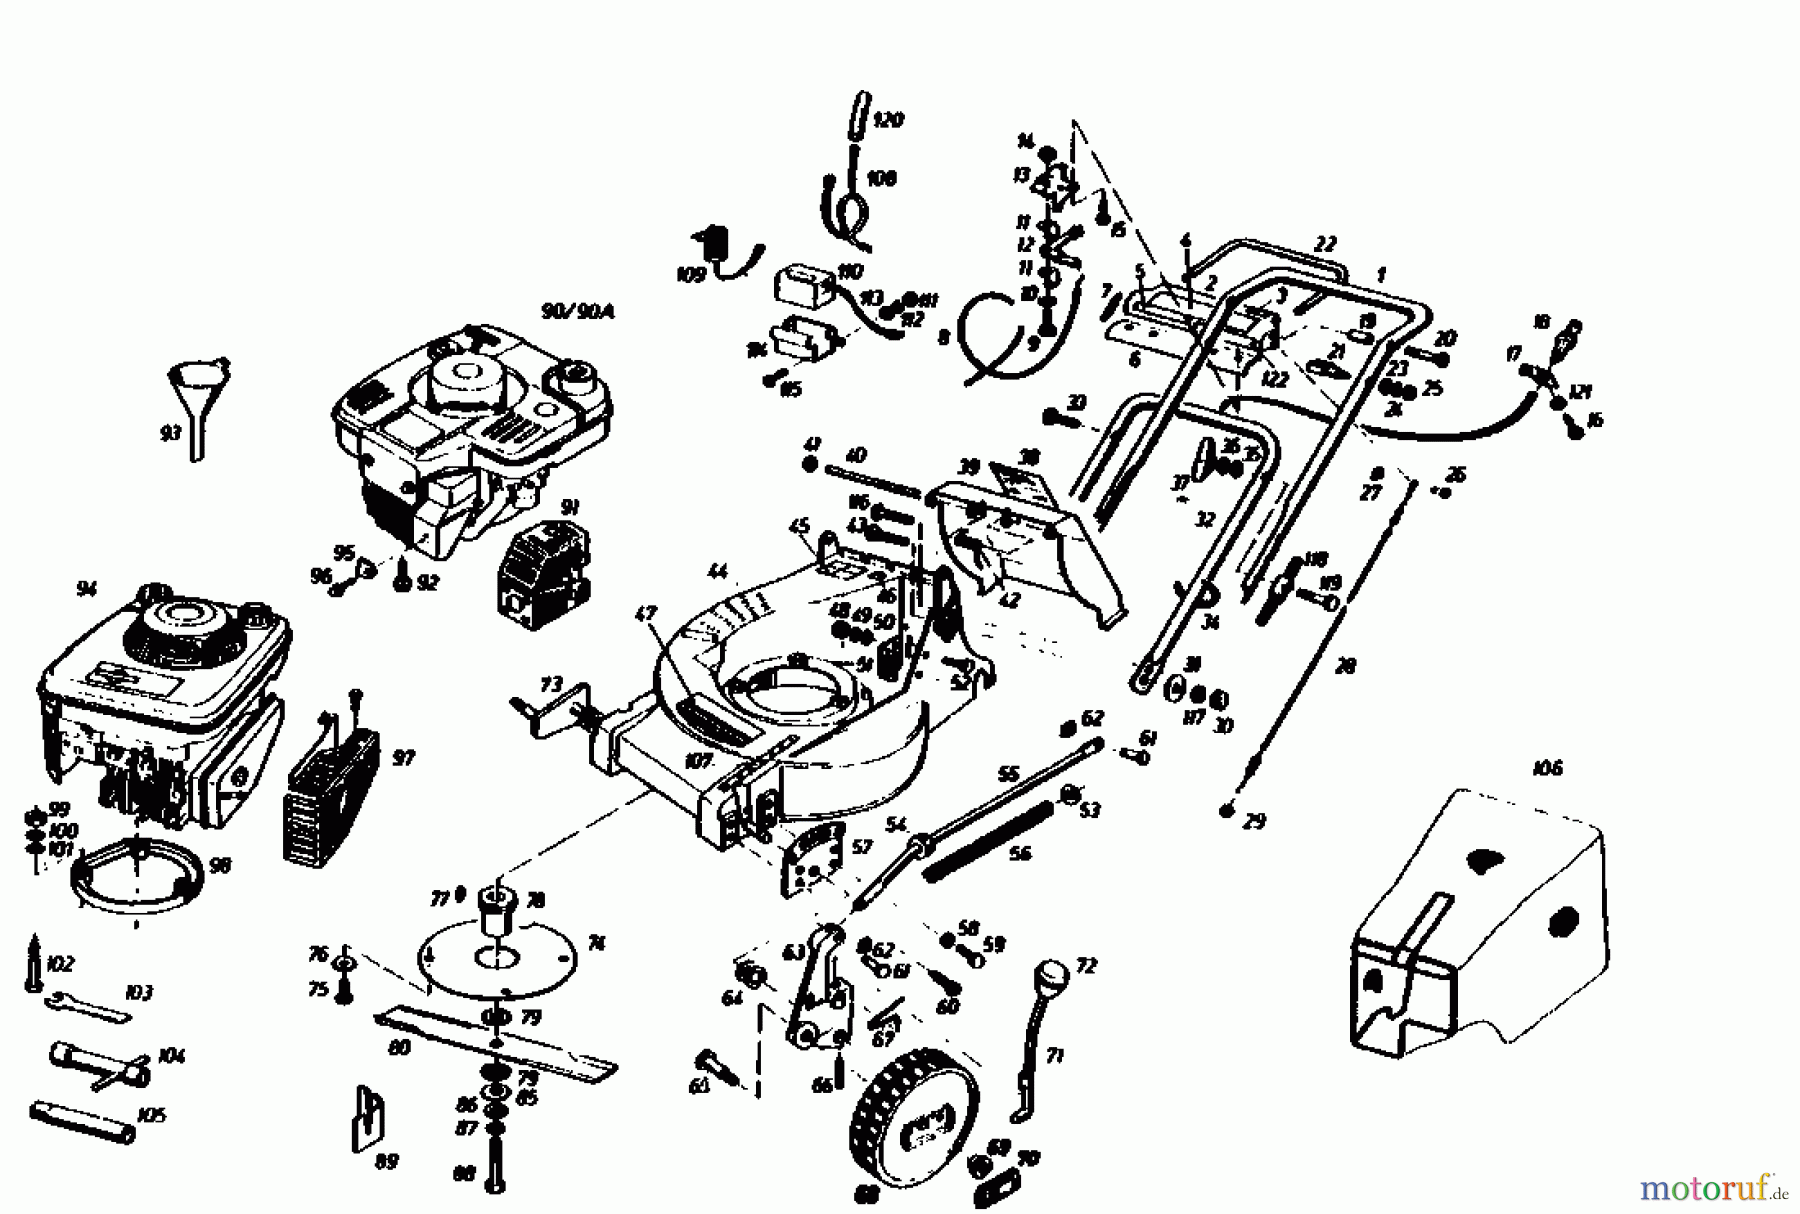  Gutbrod Petrol mower self propelled HB 55 R 02882.01  (1986) Basic machine